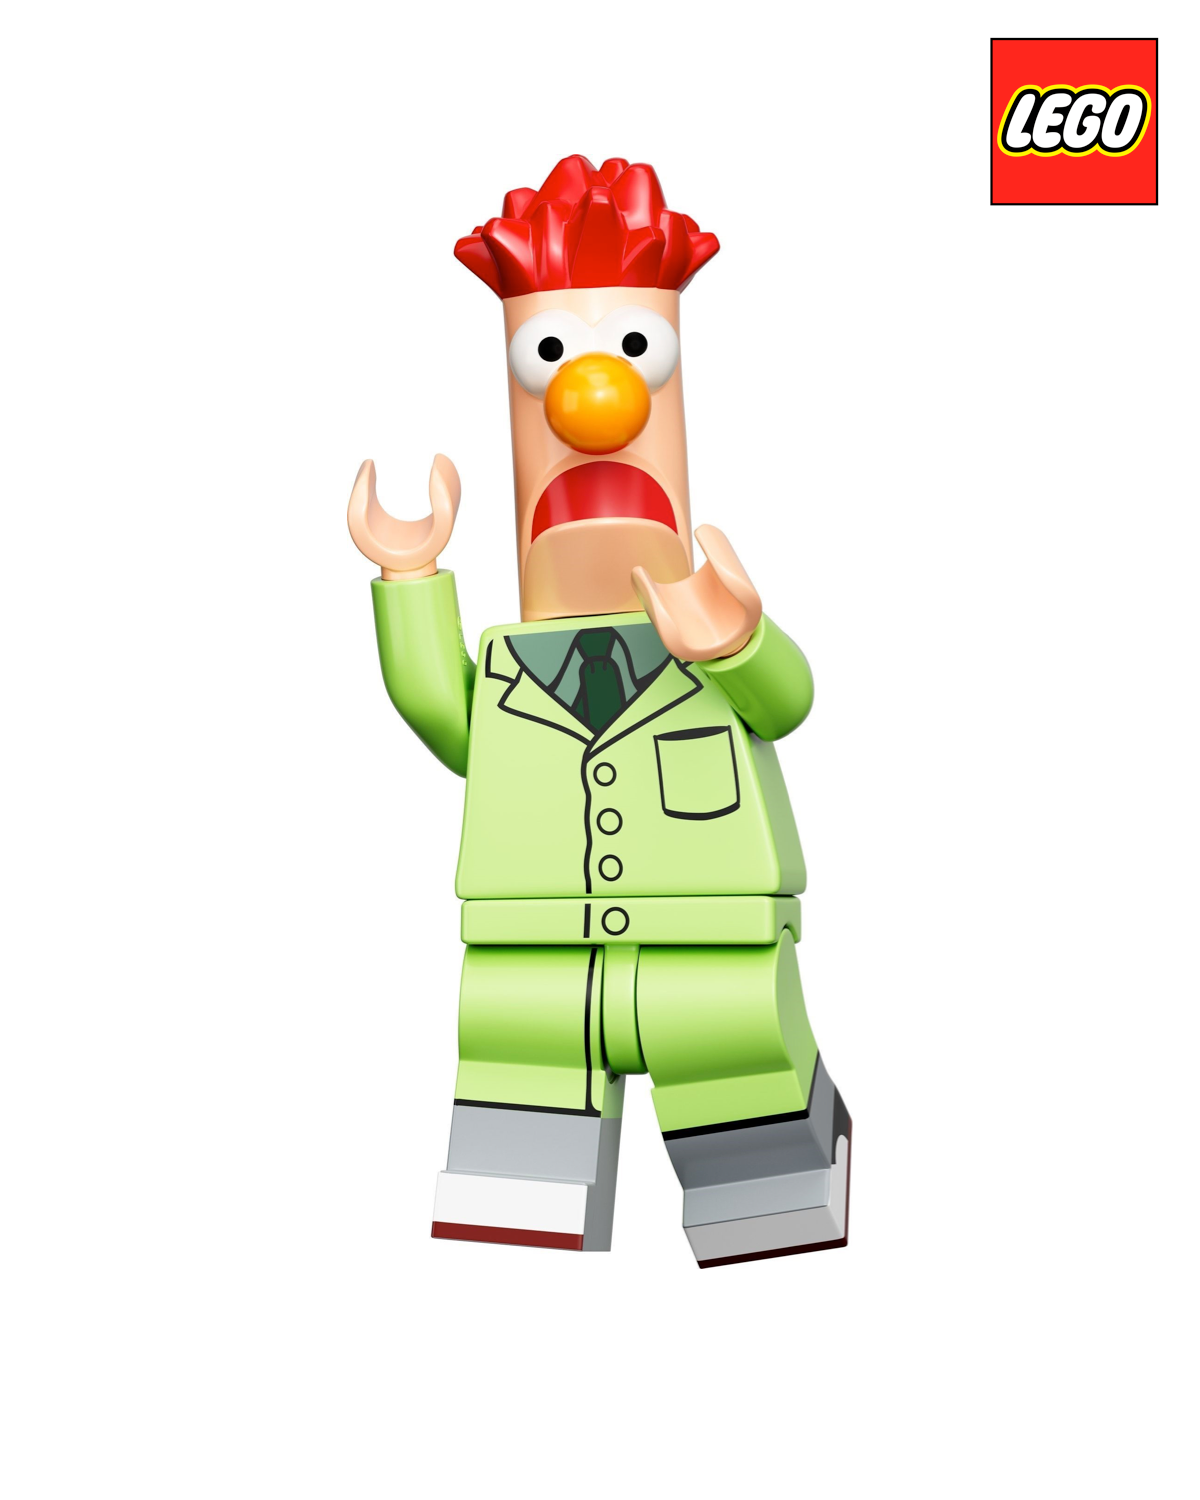 Beaker - The Muppets | LEGO Minifigure | The Muppets